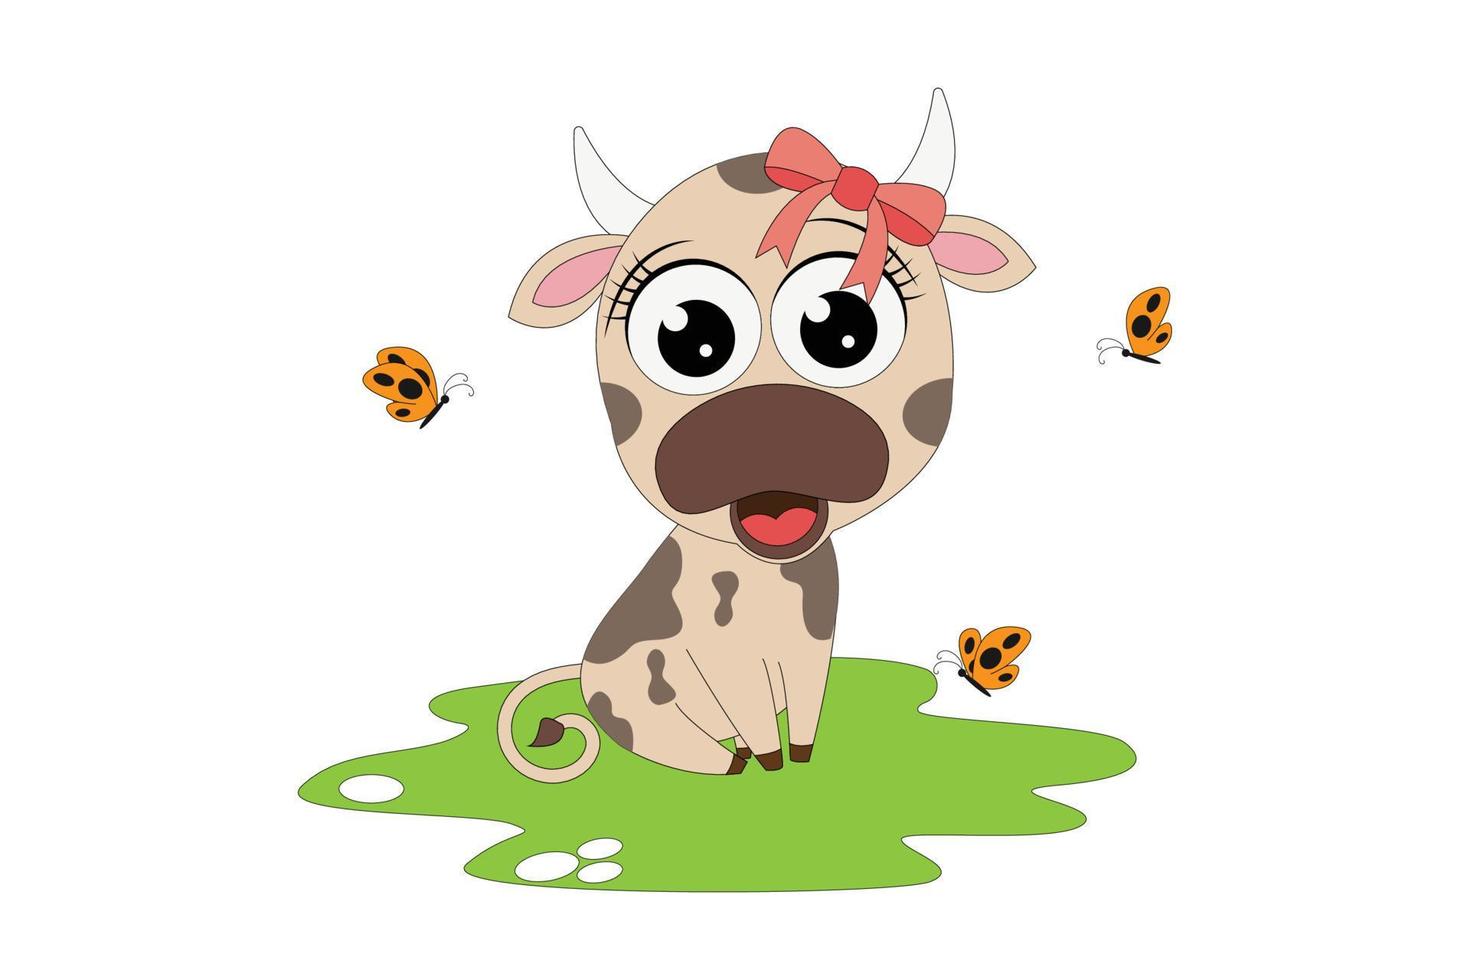 cute cow animal cartoon graphic vector